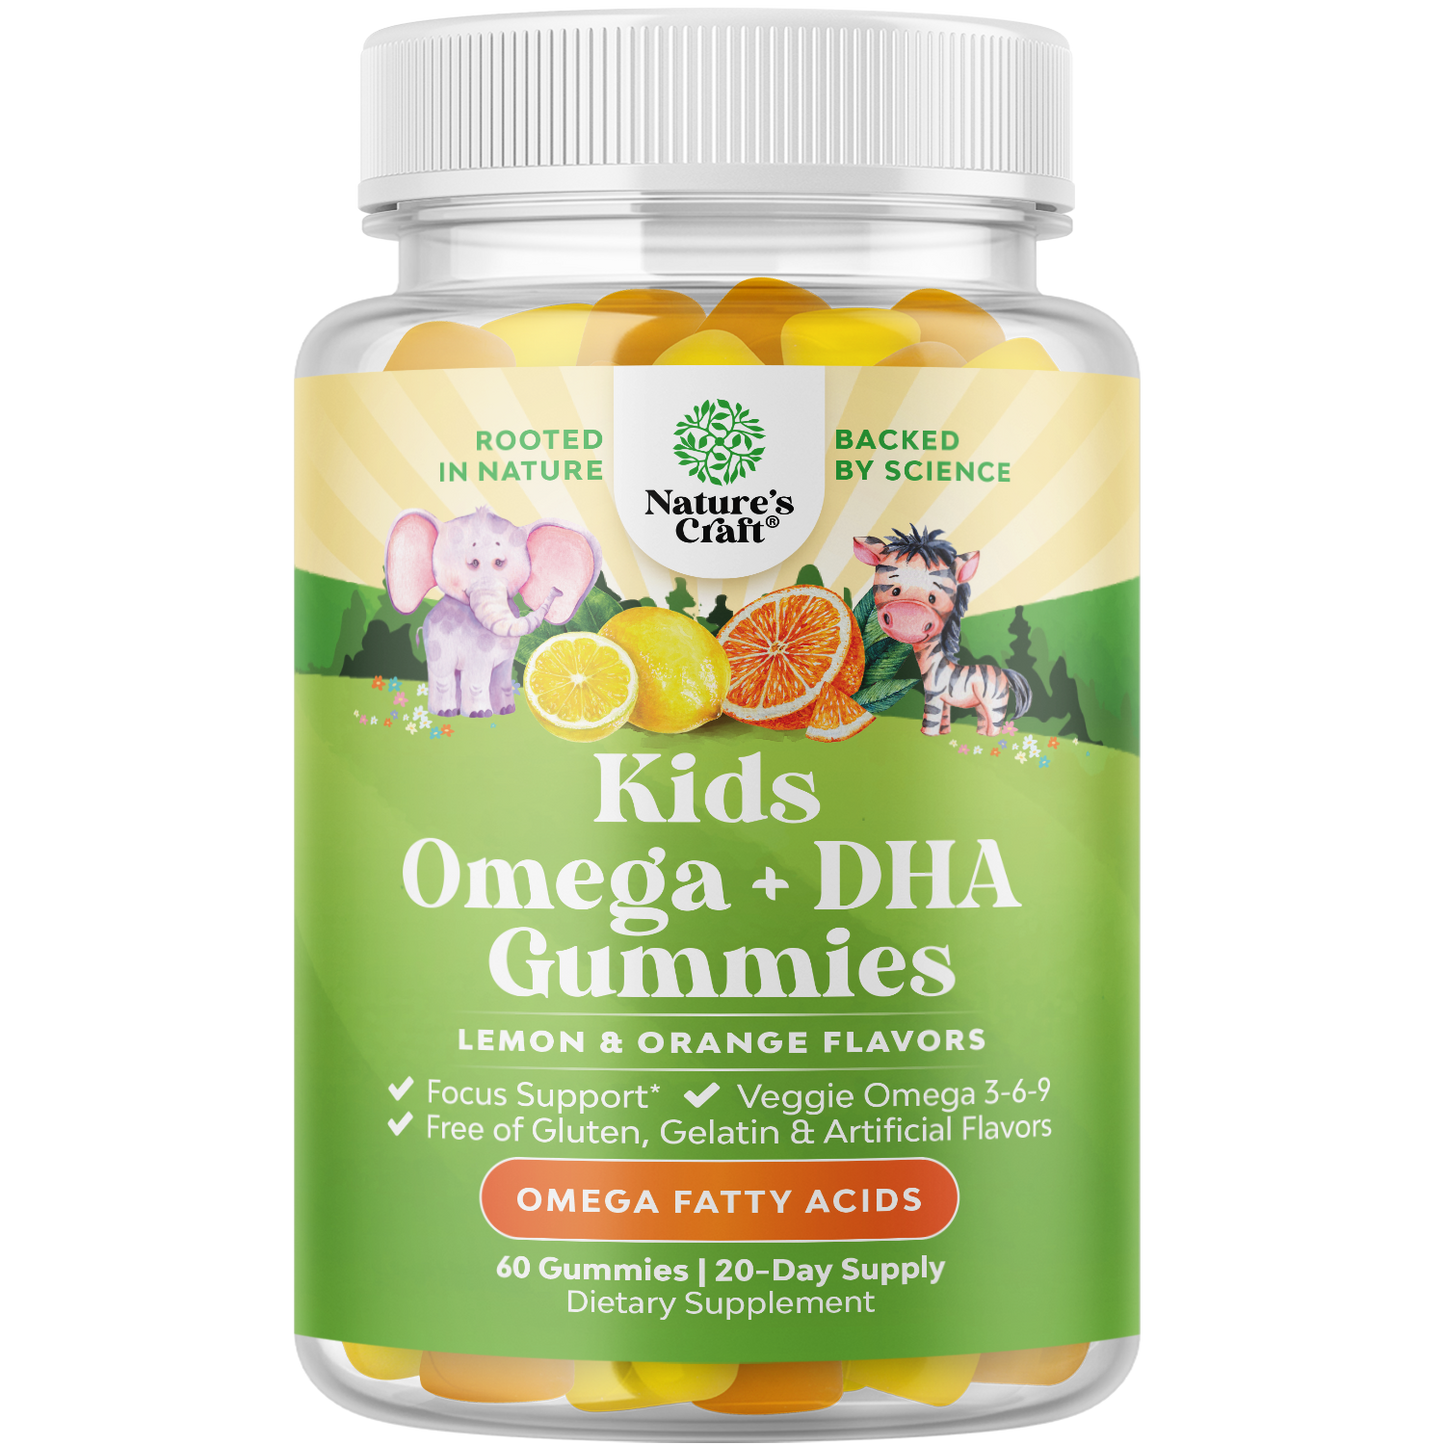 Kids Omega + DHA Gummies - 60 Gummies